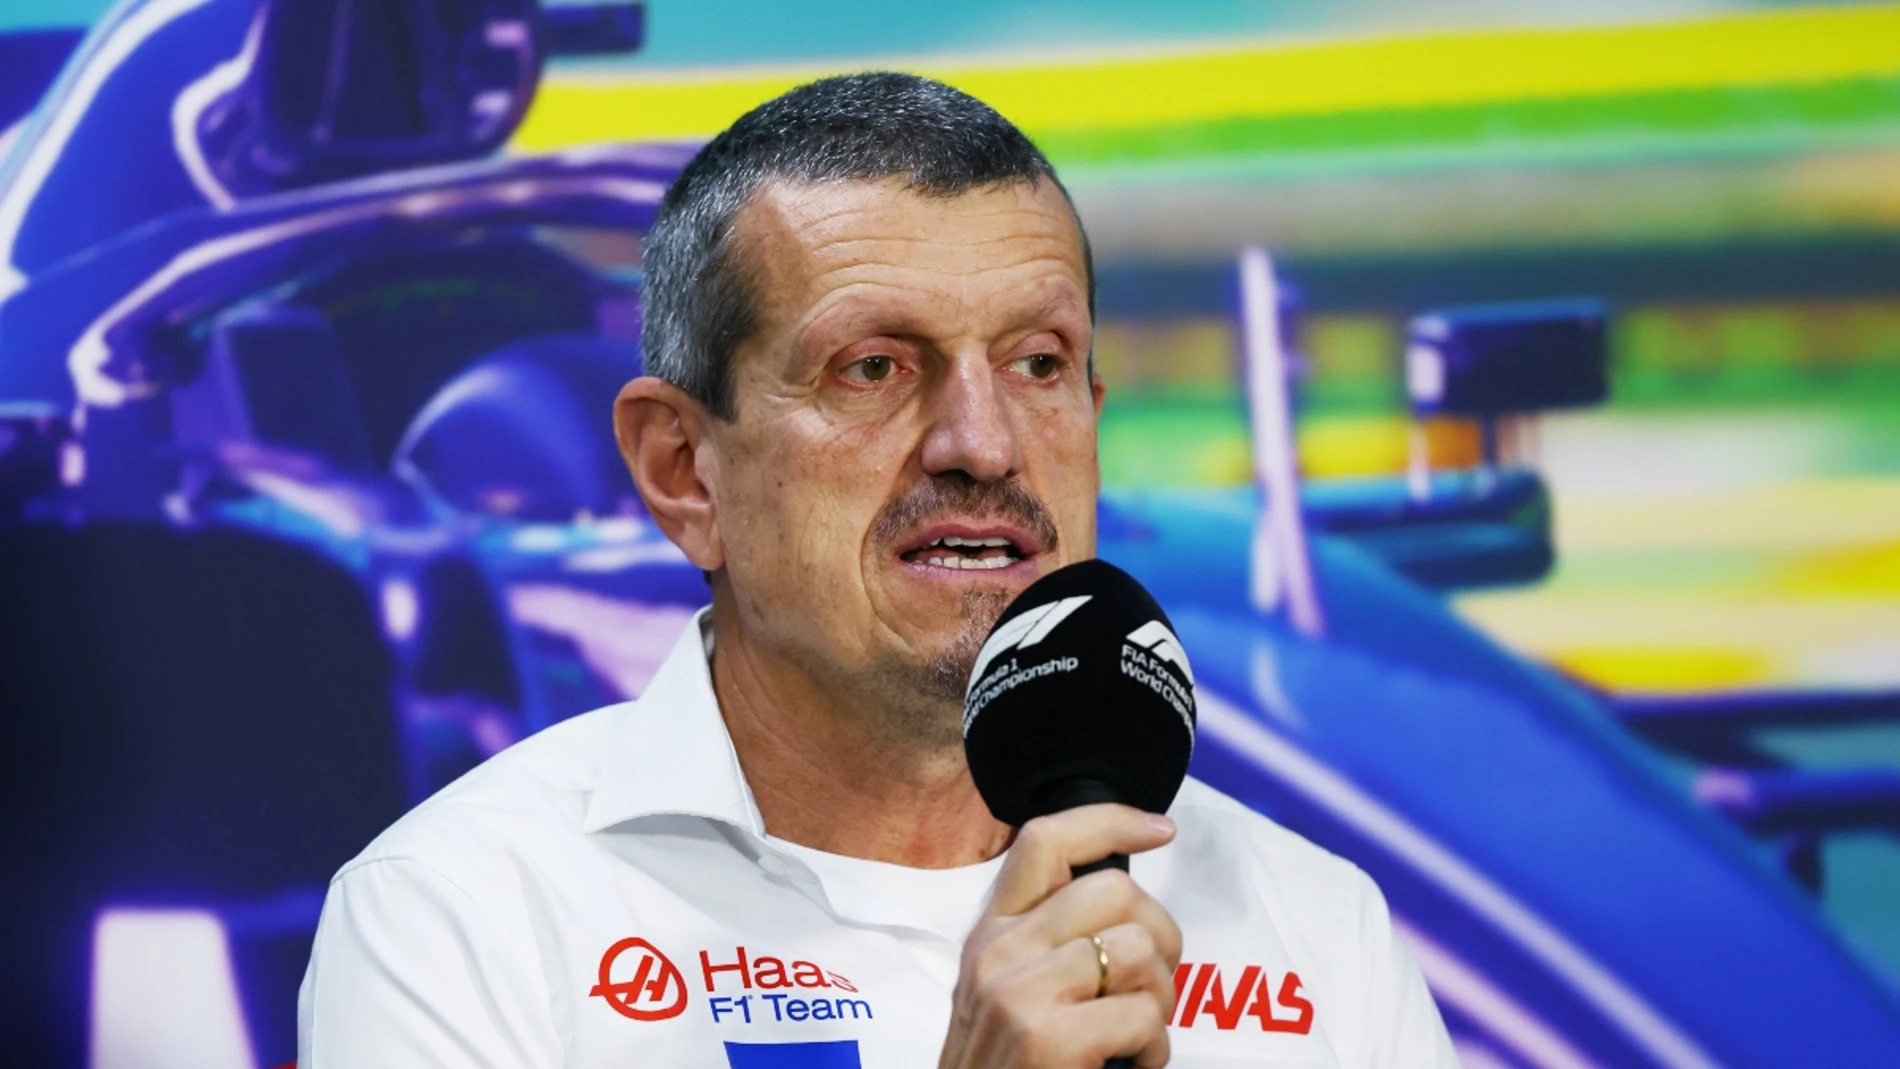 Guenther Steiner, jefe del equipo Haas